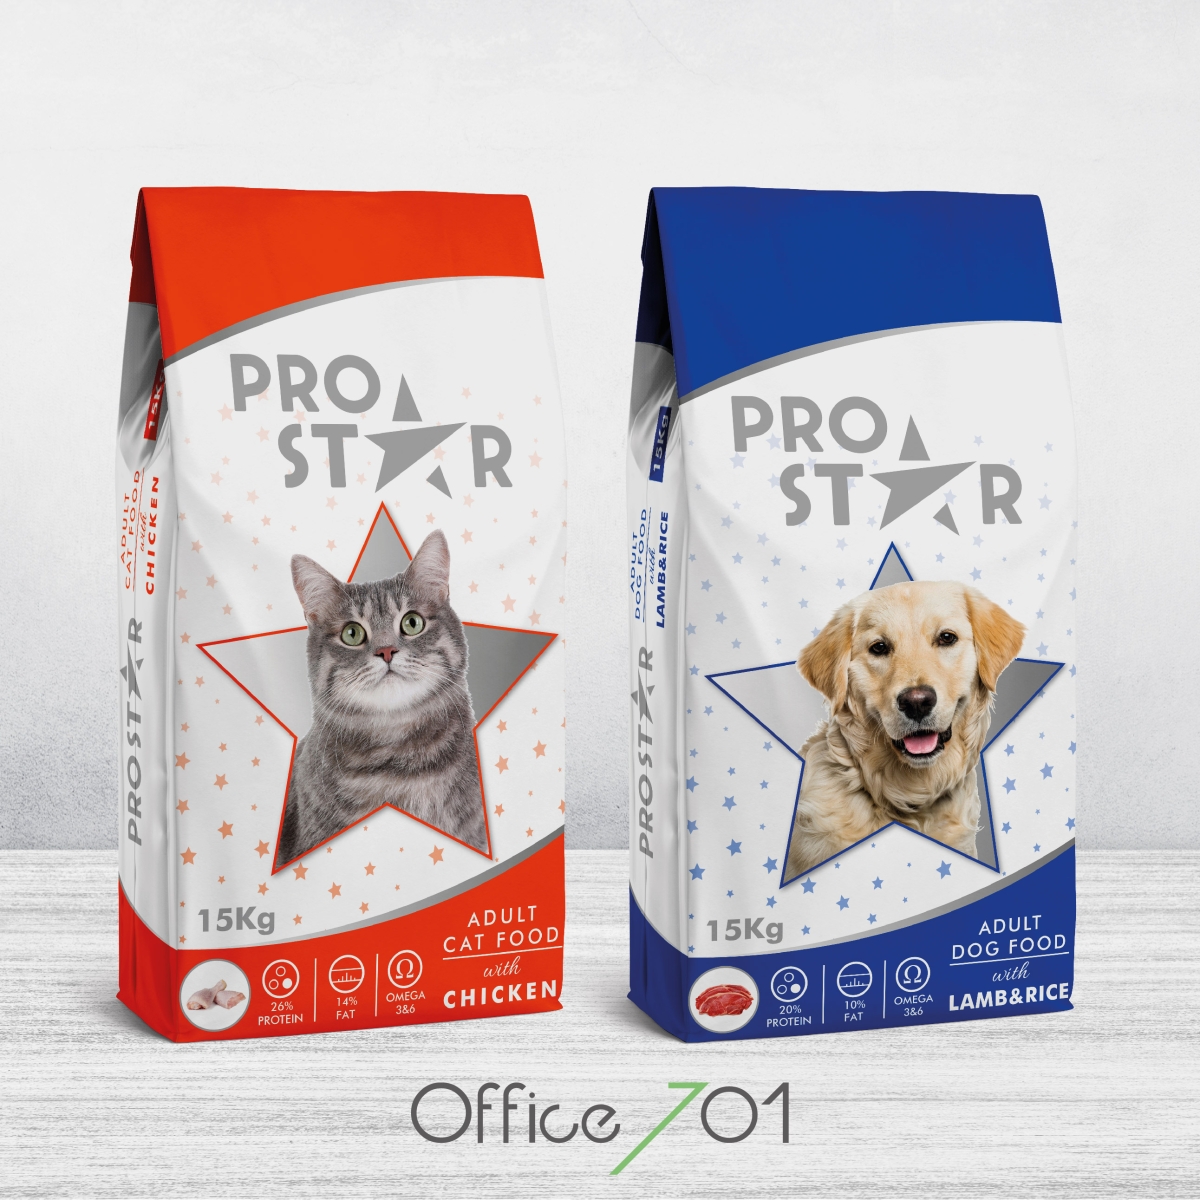 Office701 | Prostar | Pet Food Package Design